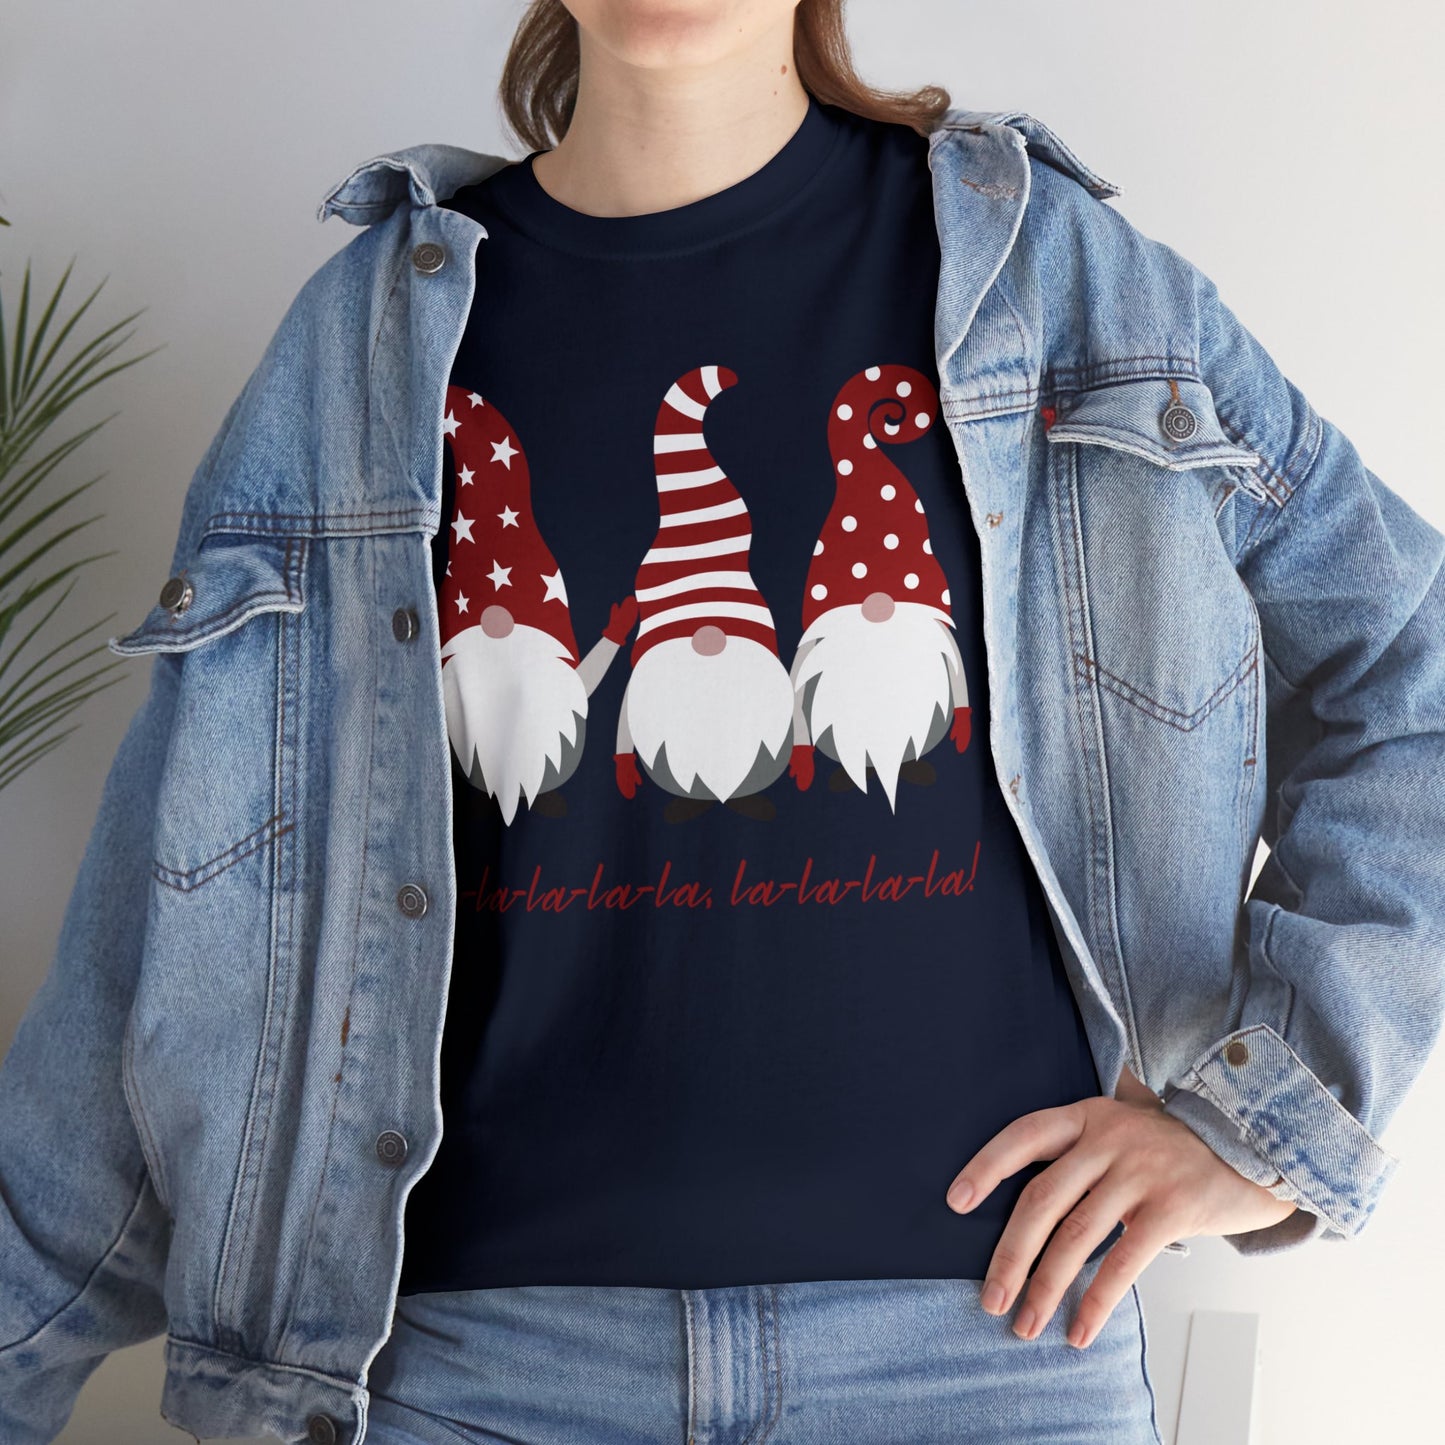 Falala Christmas Gnome Cotton T-shirt